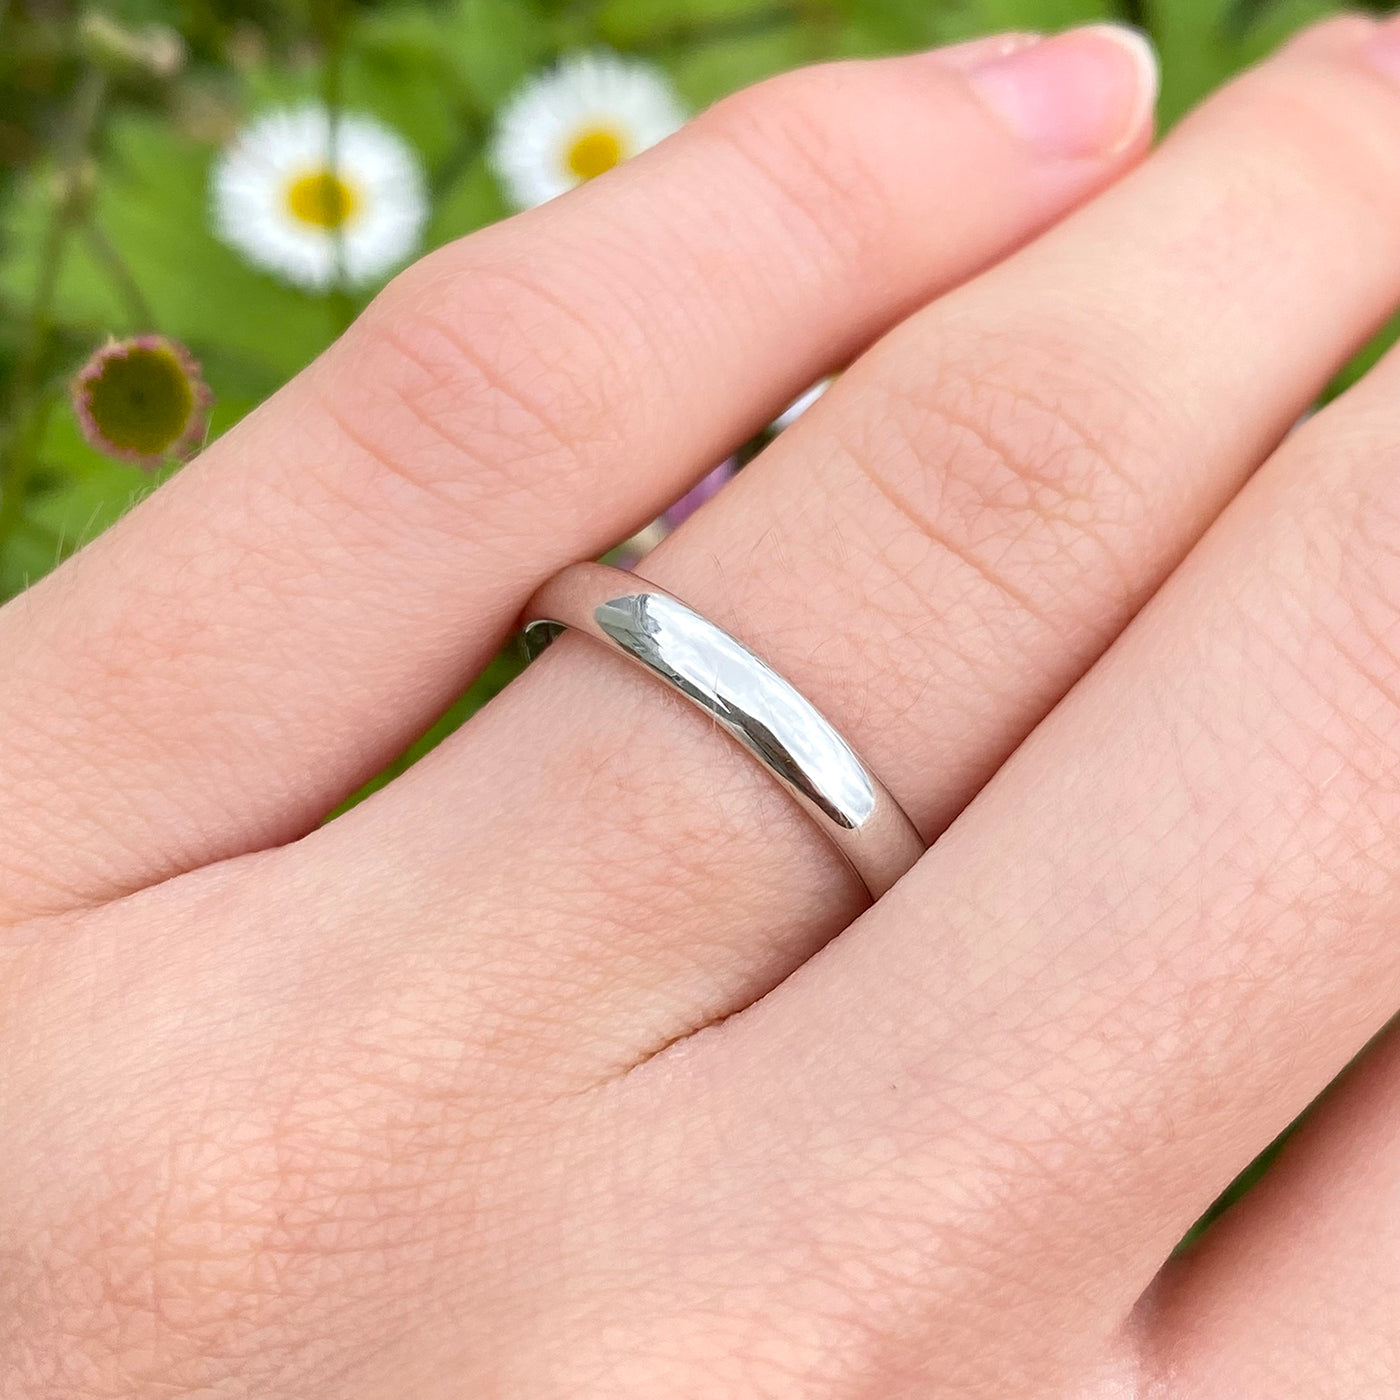 3mm Platinum Comfort or Court Shape Wedding Ring – Size O 1/2 (Resize G – P)